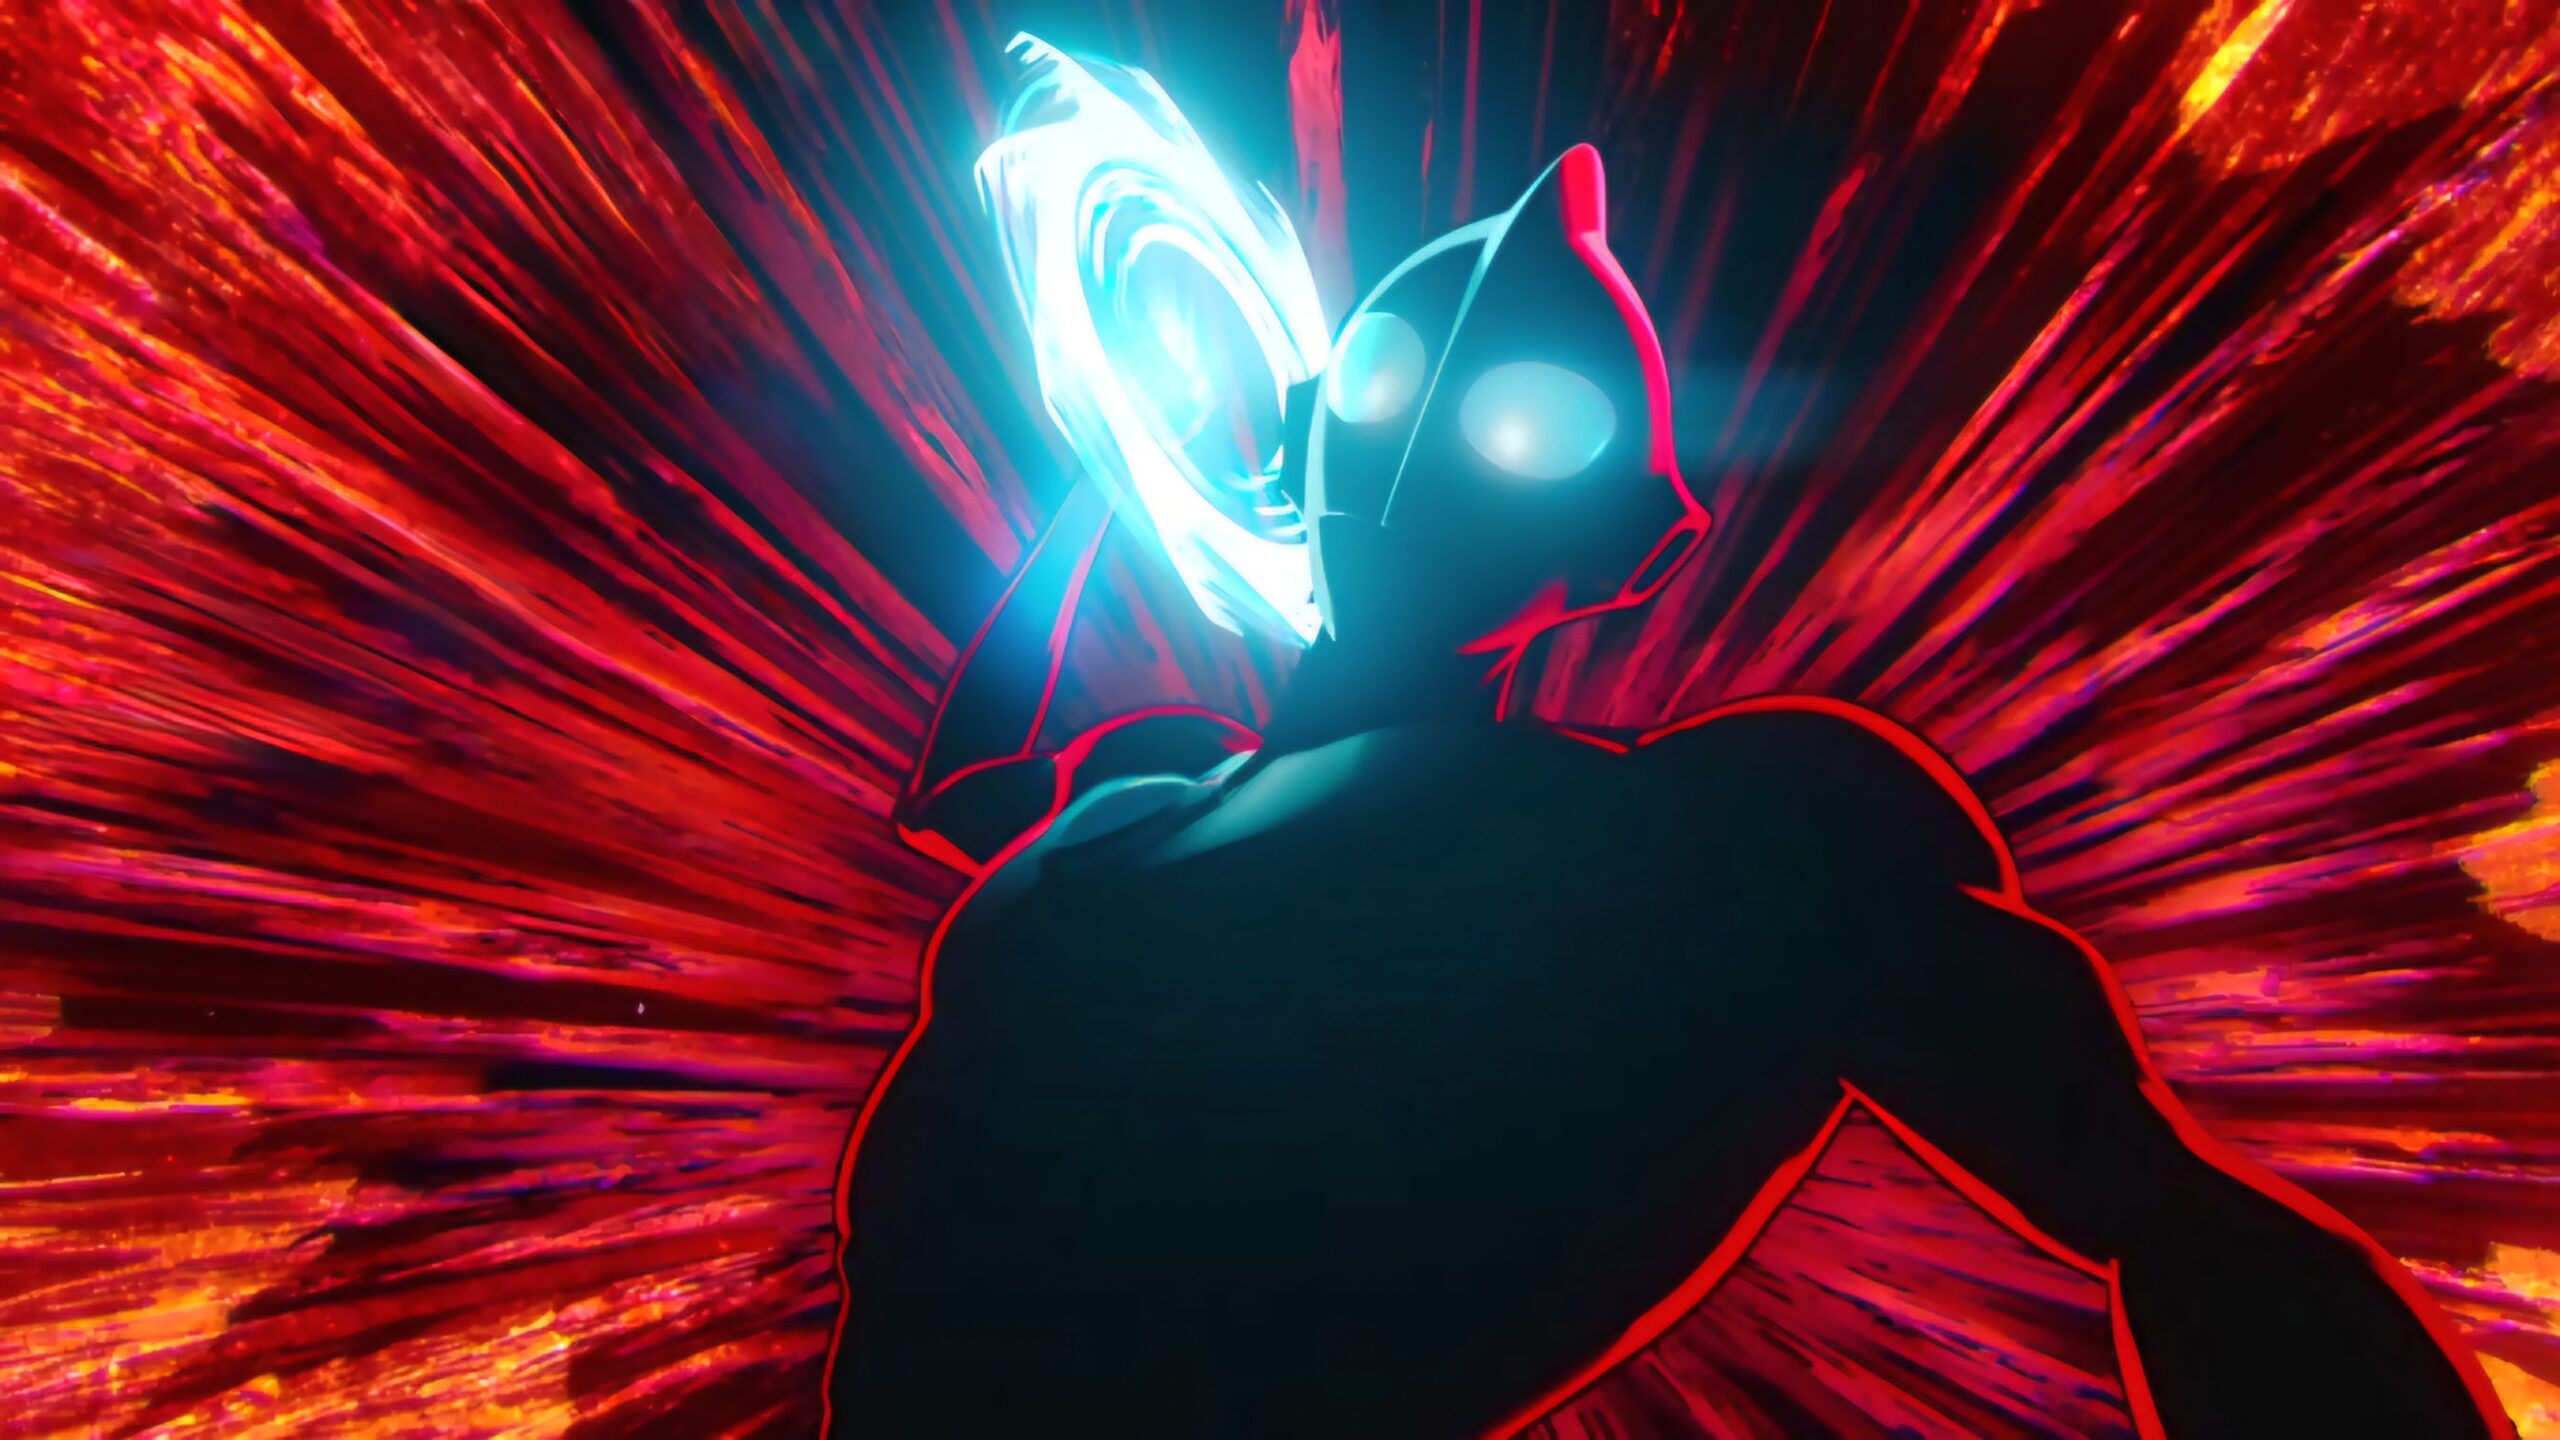 Ultraman rising review